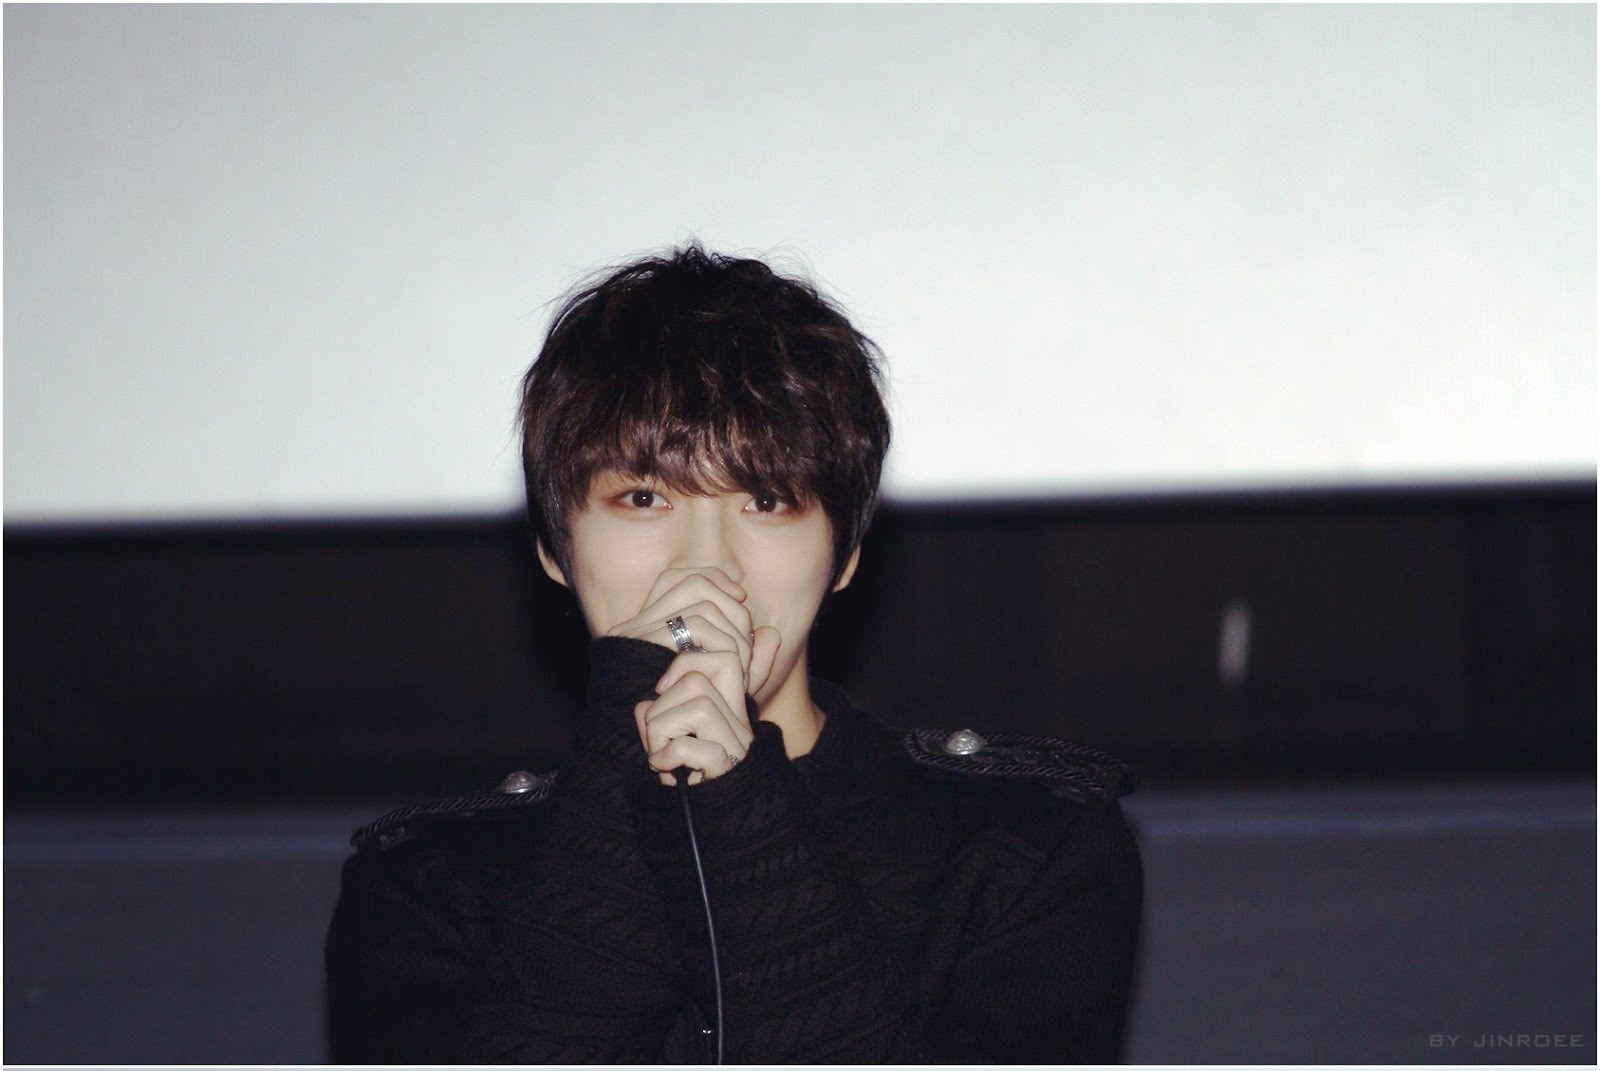 [24.11.12][Pics] Jaejoong - “Code Name Jackal” Stage Greeting (Day 5)  Jr2-1